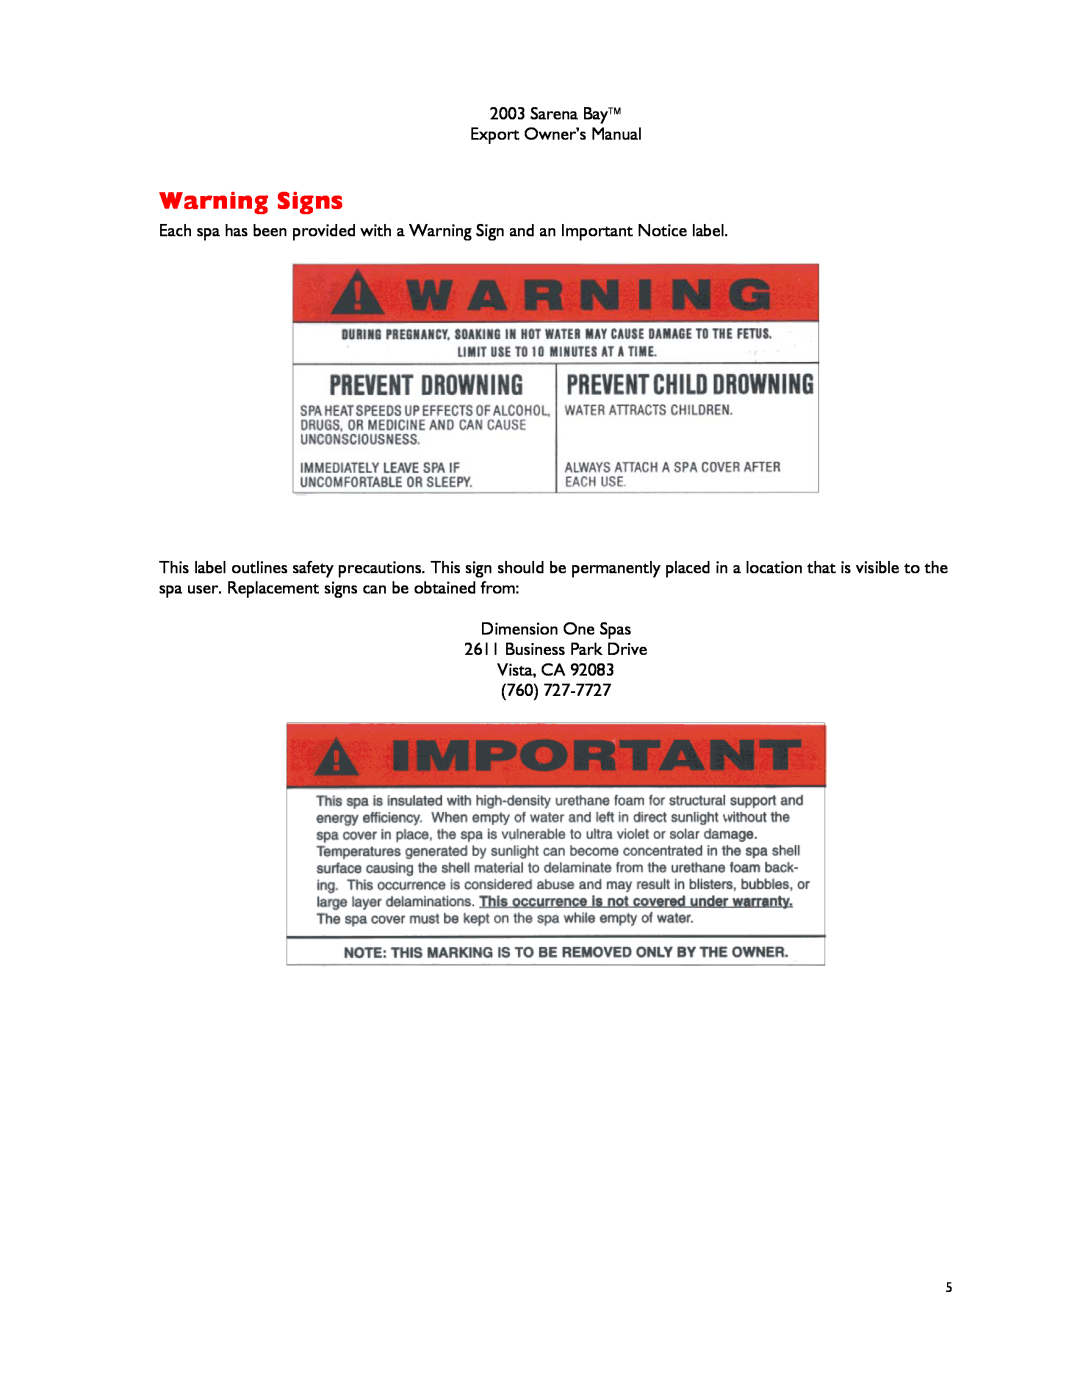 Dimension One Spas manual Warning Signs, Sarena Bay Export Owner’s Manual 